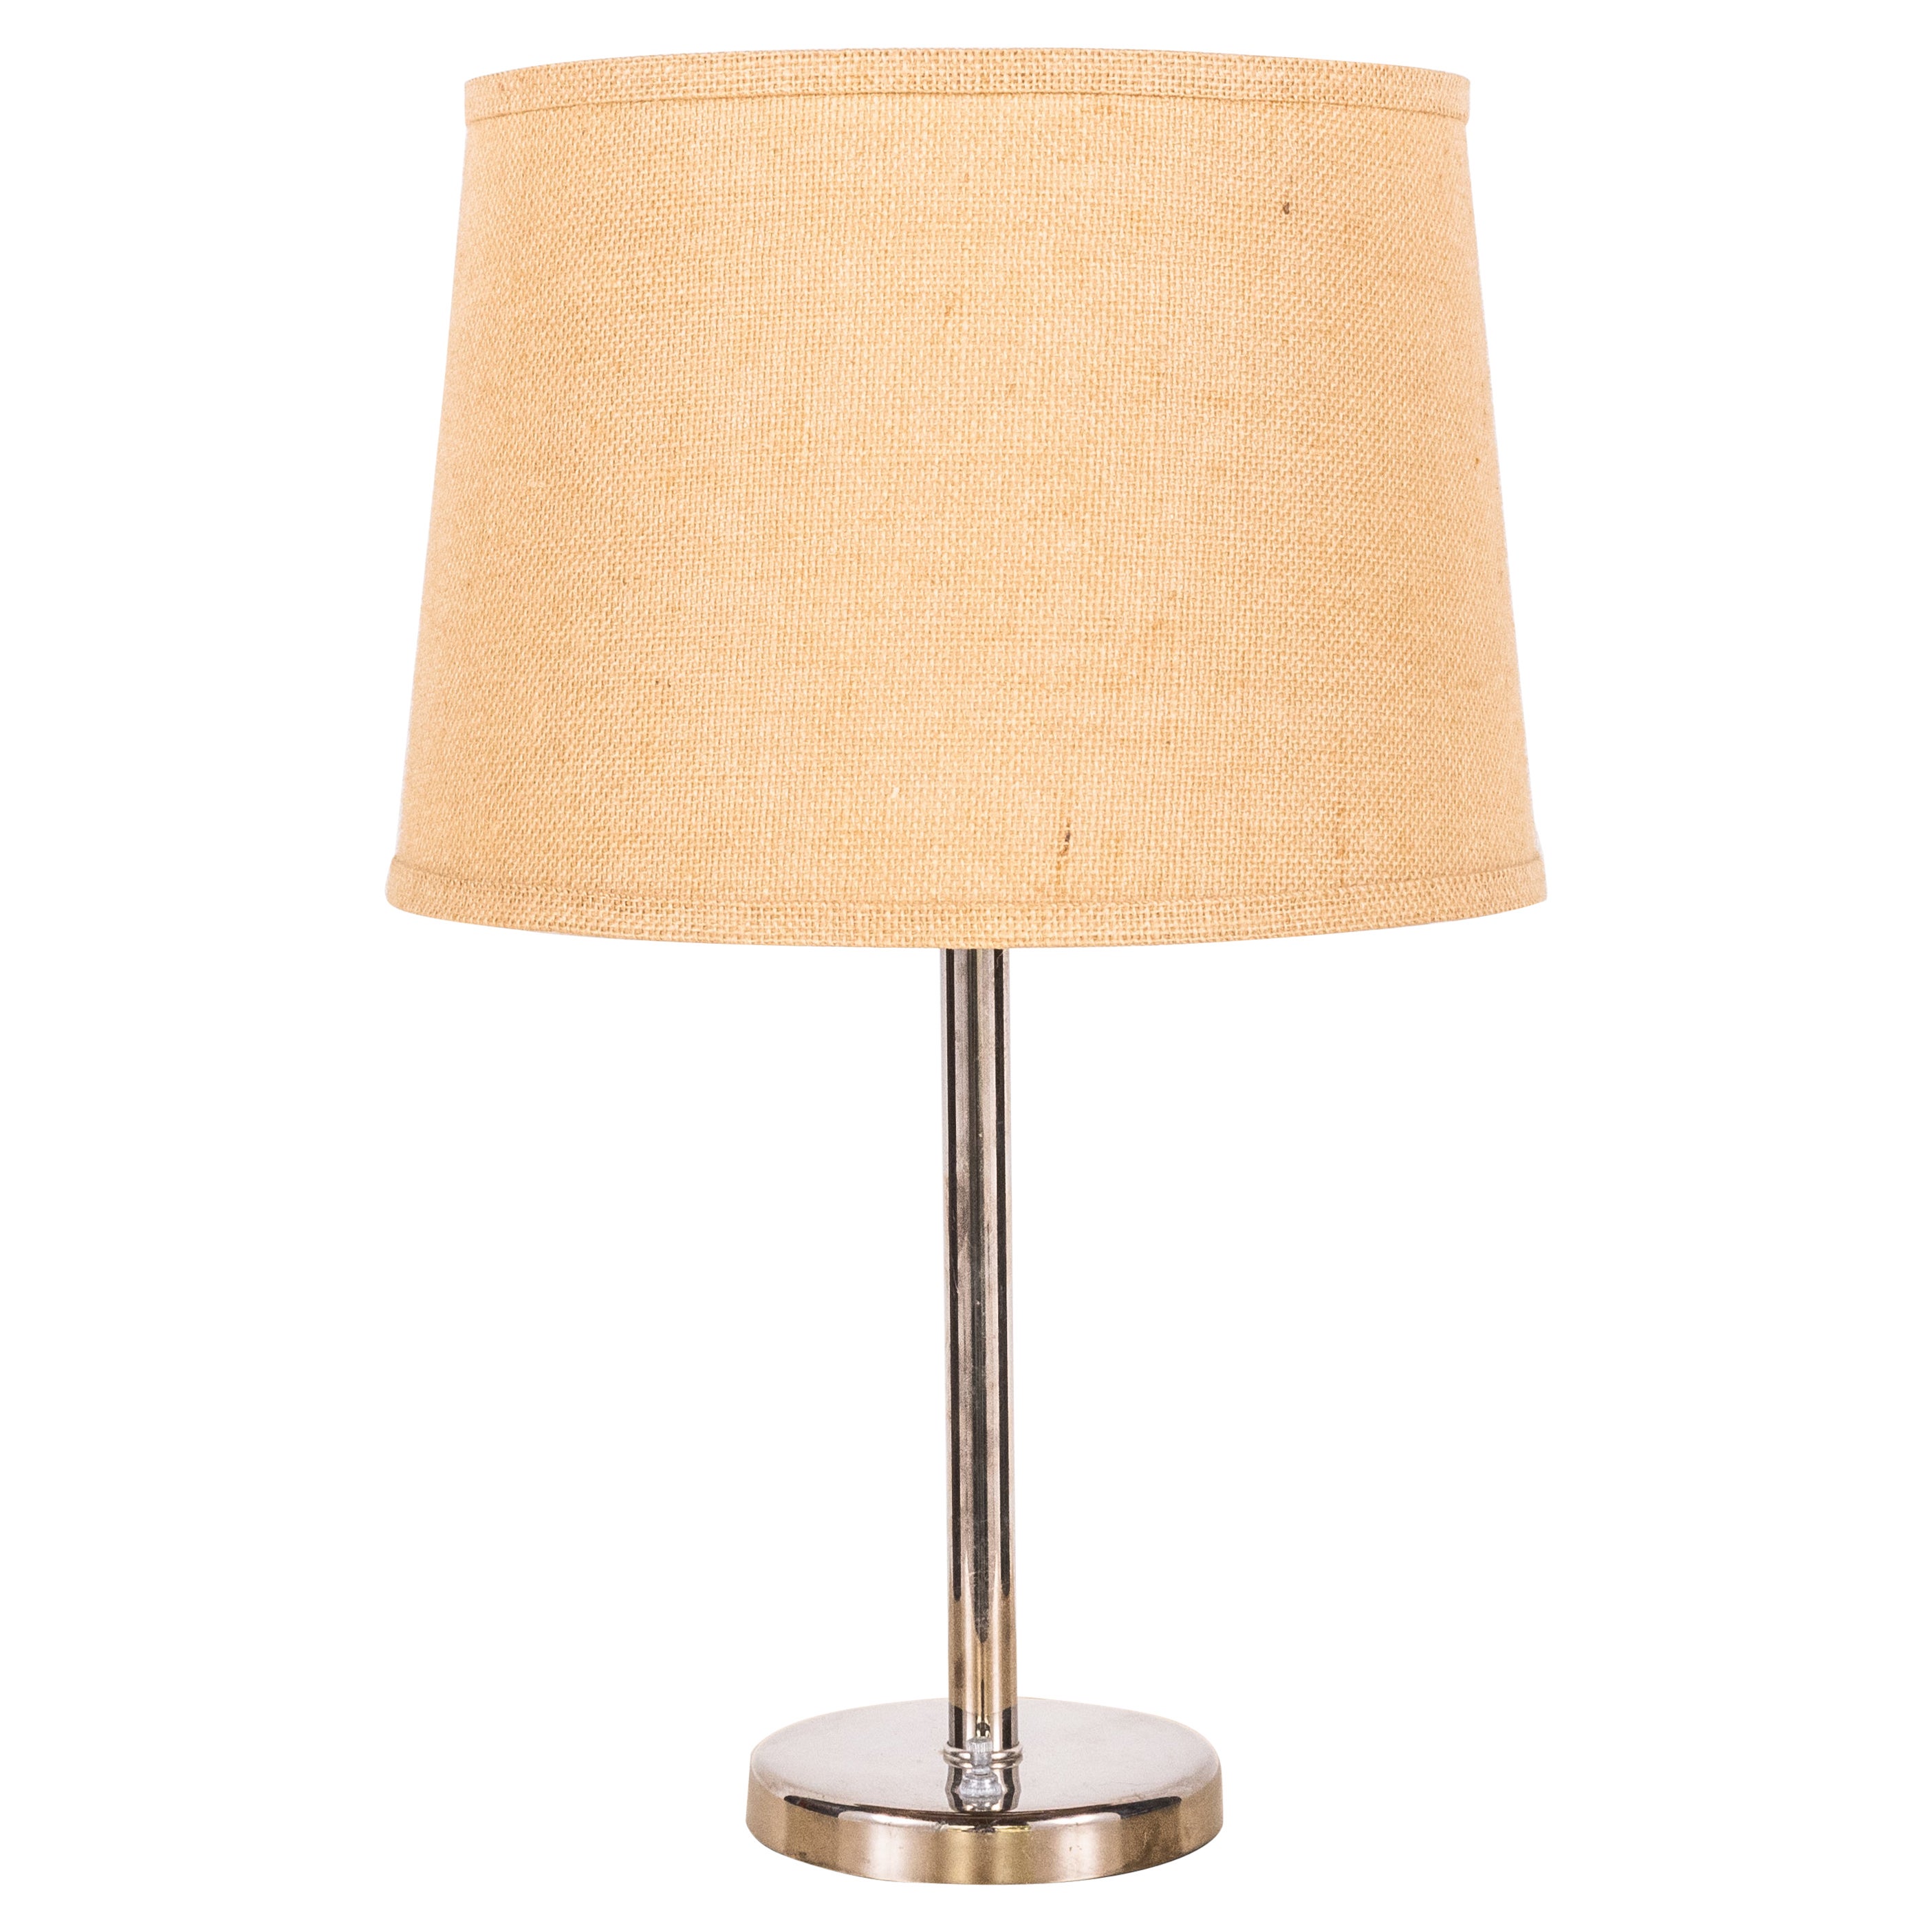 Chrome Lamp with Burlap Shade by Nessen Lighting